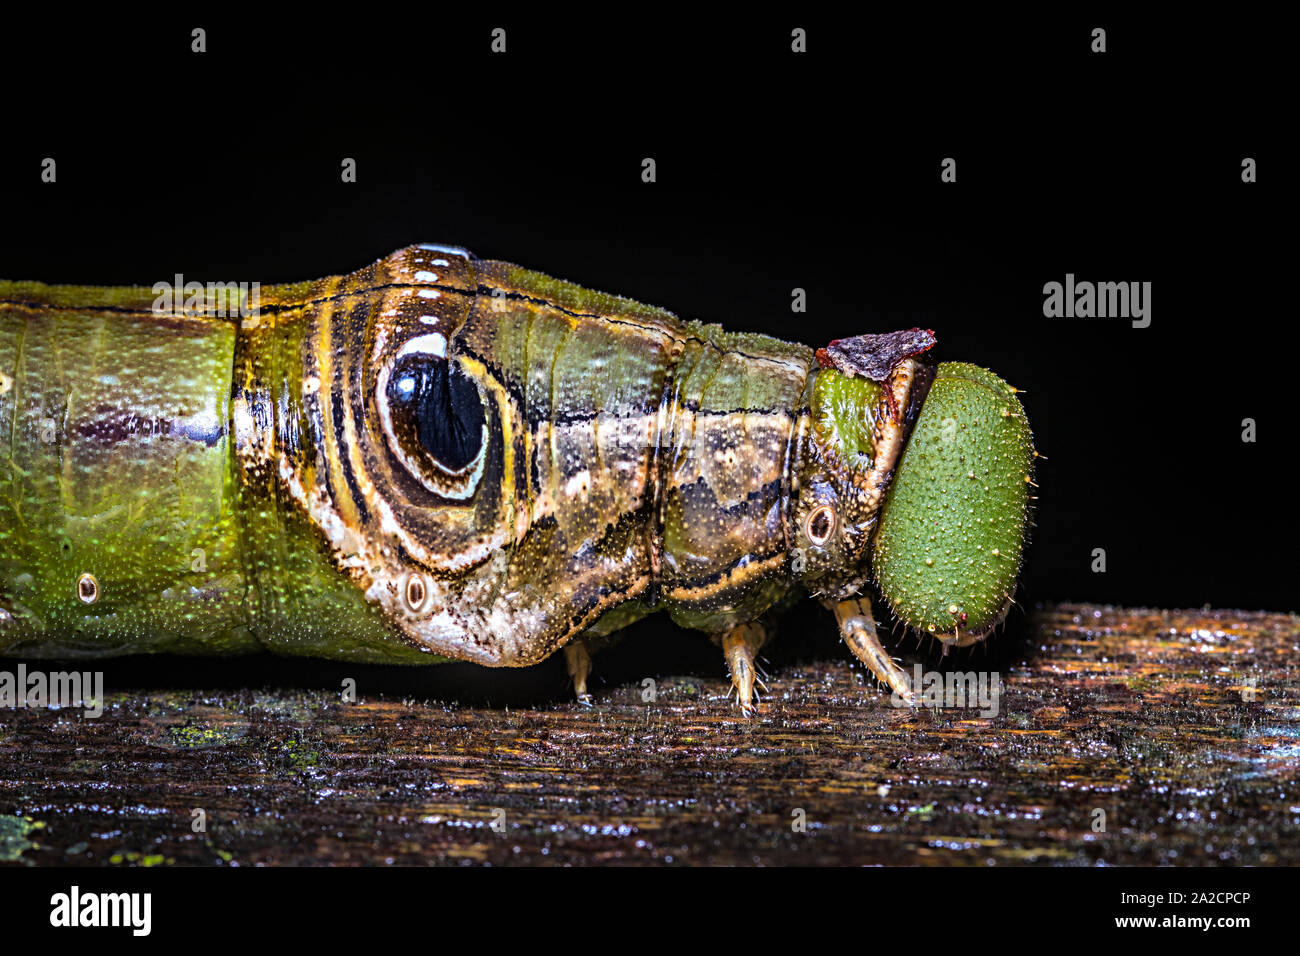 Caterpillar at night in rainforest with mimicry eye, Mulu, Malaysia Stock Photo